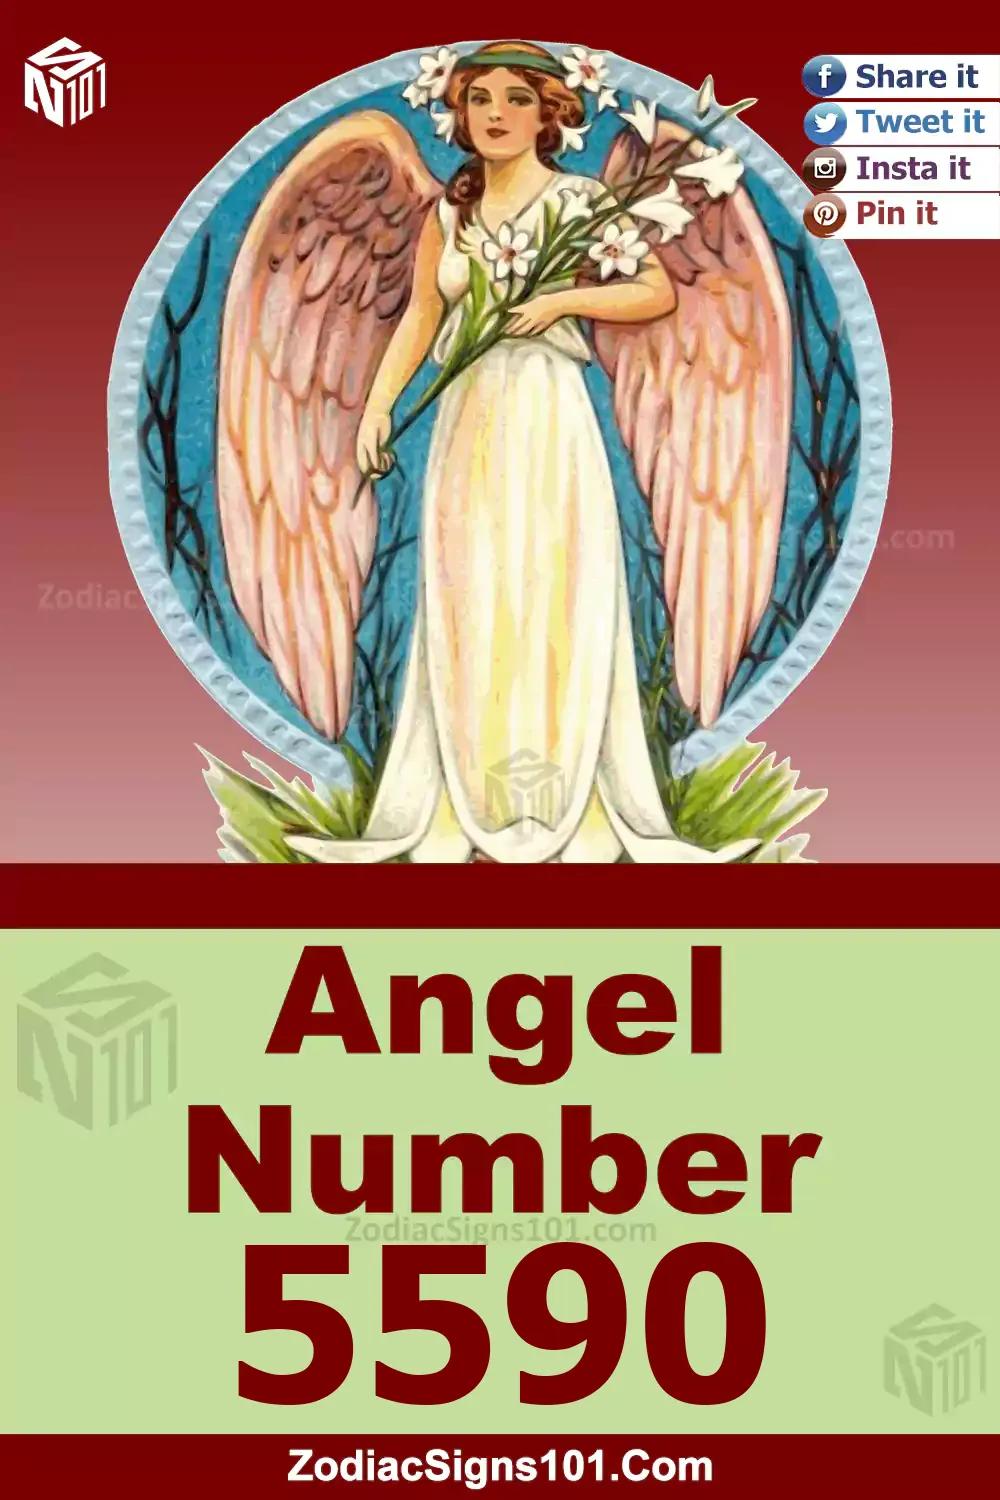 5590-Angel-Number-Meaning.jpg